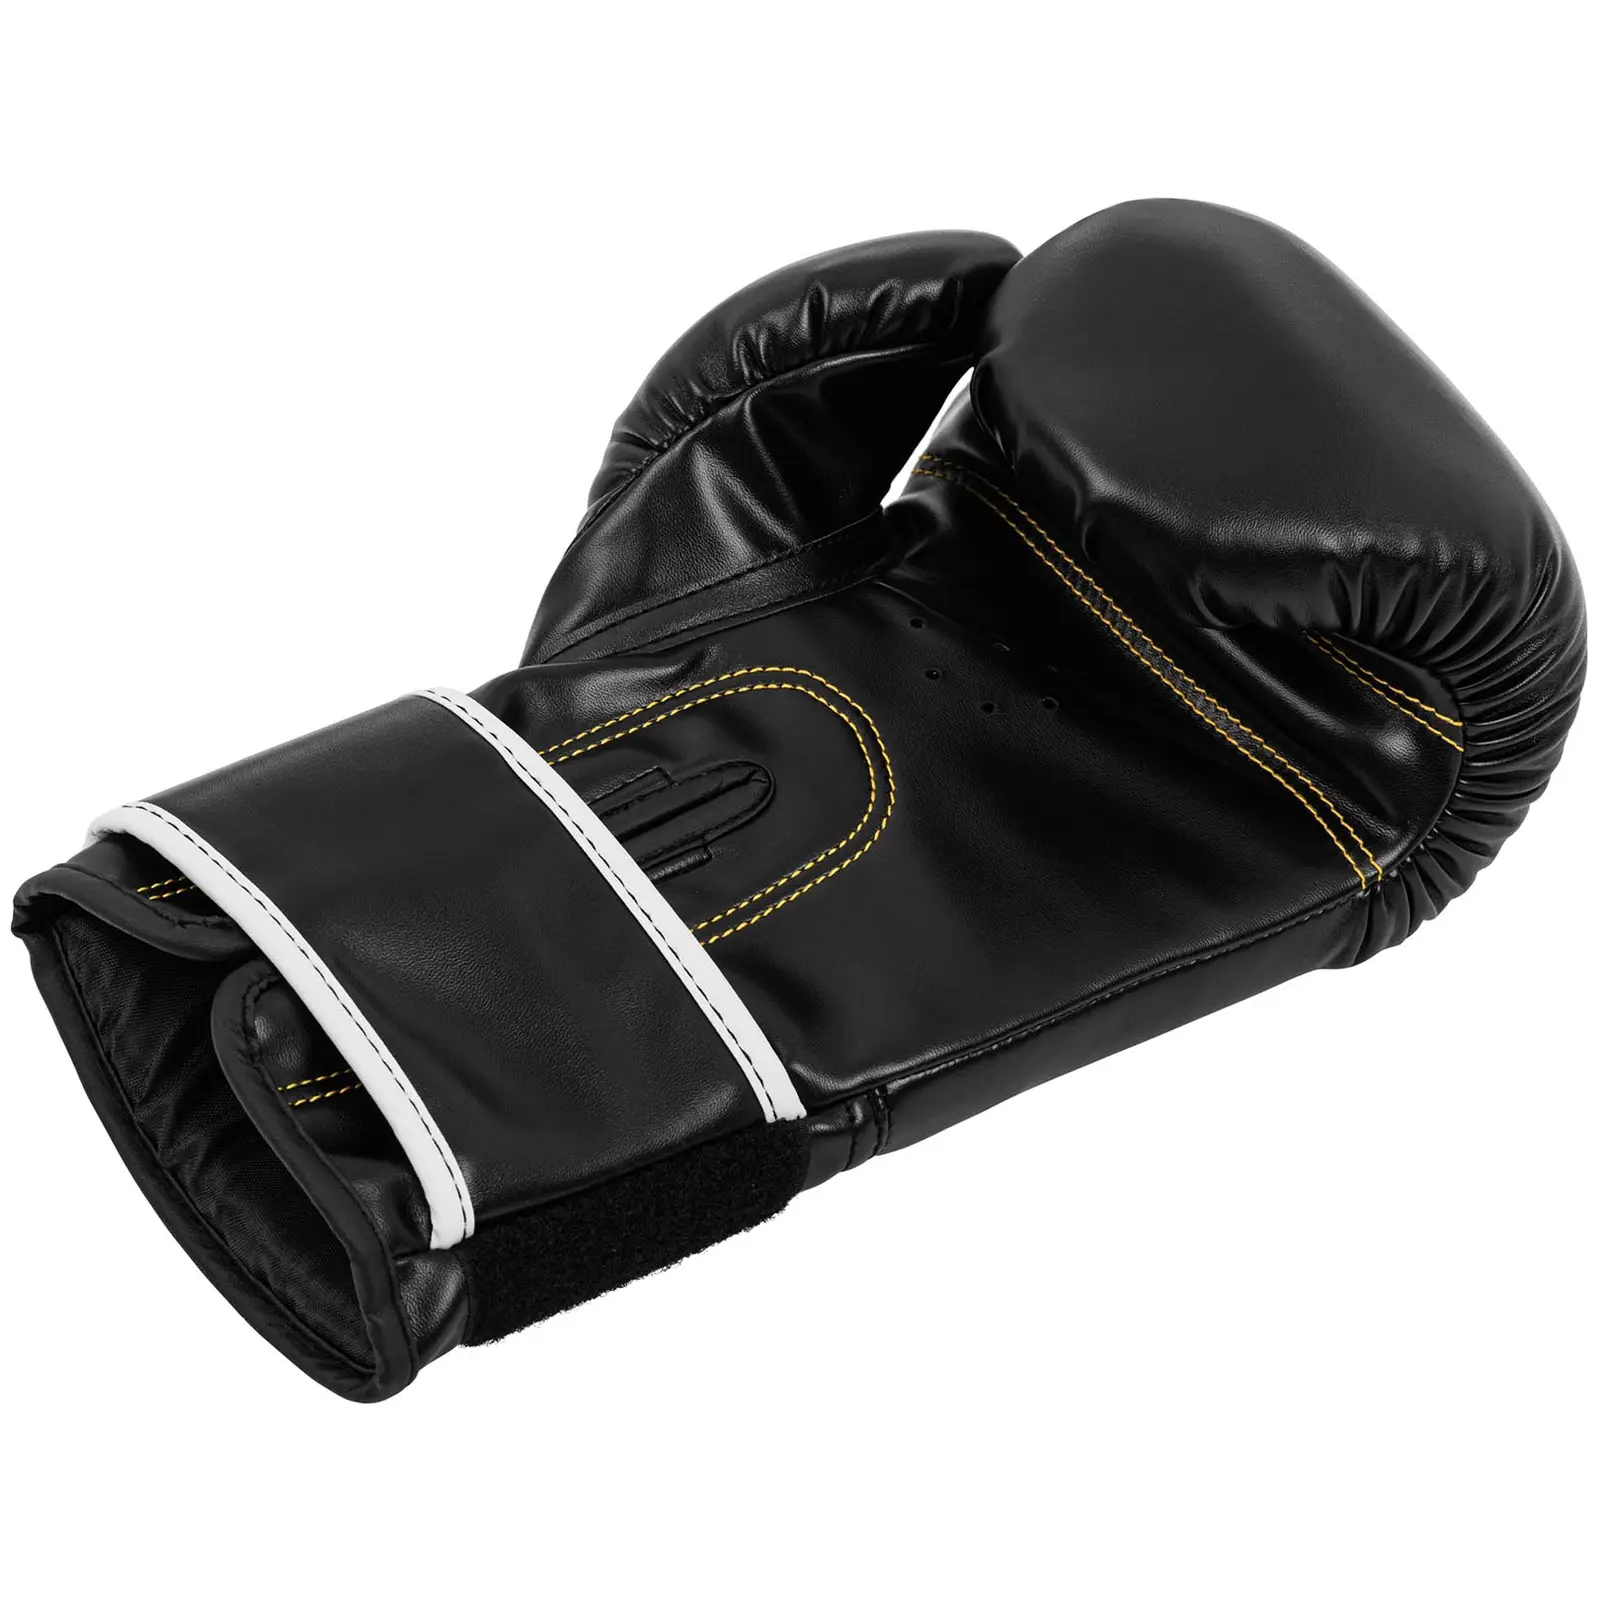 Boxing Gloves - 16 oz - black